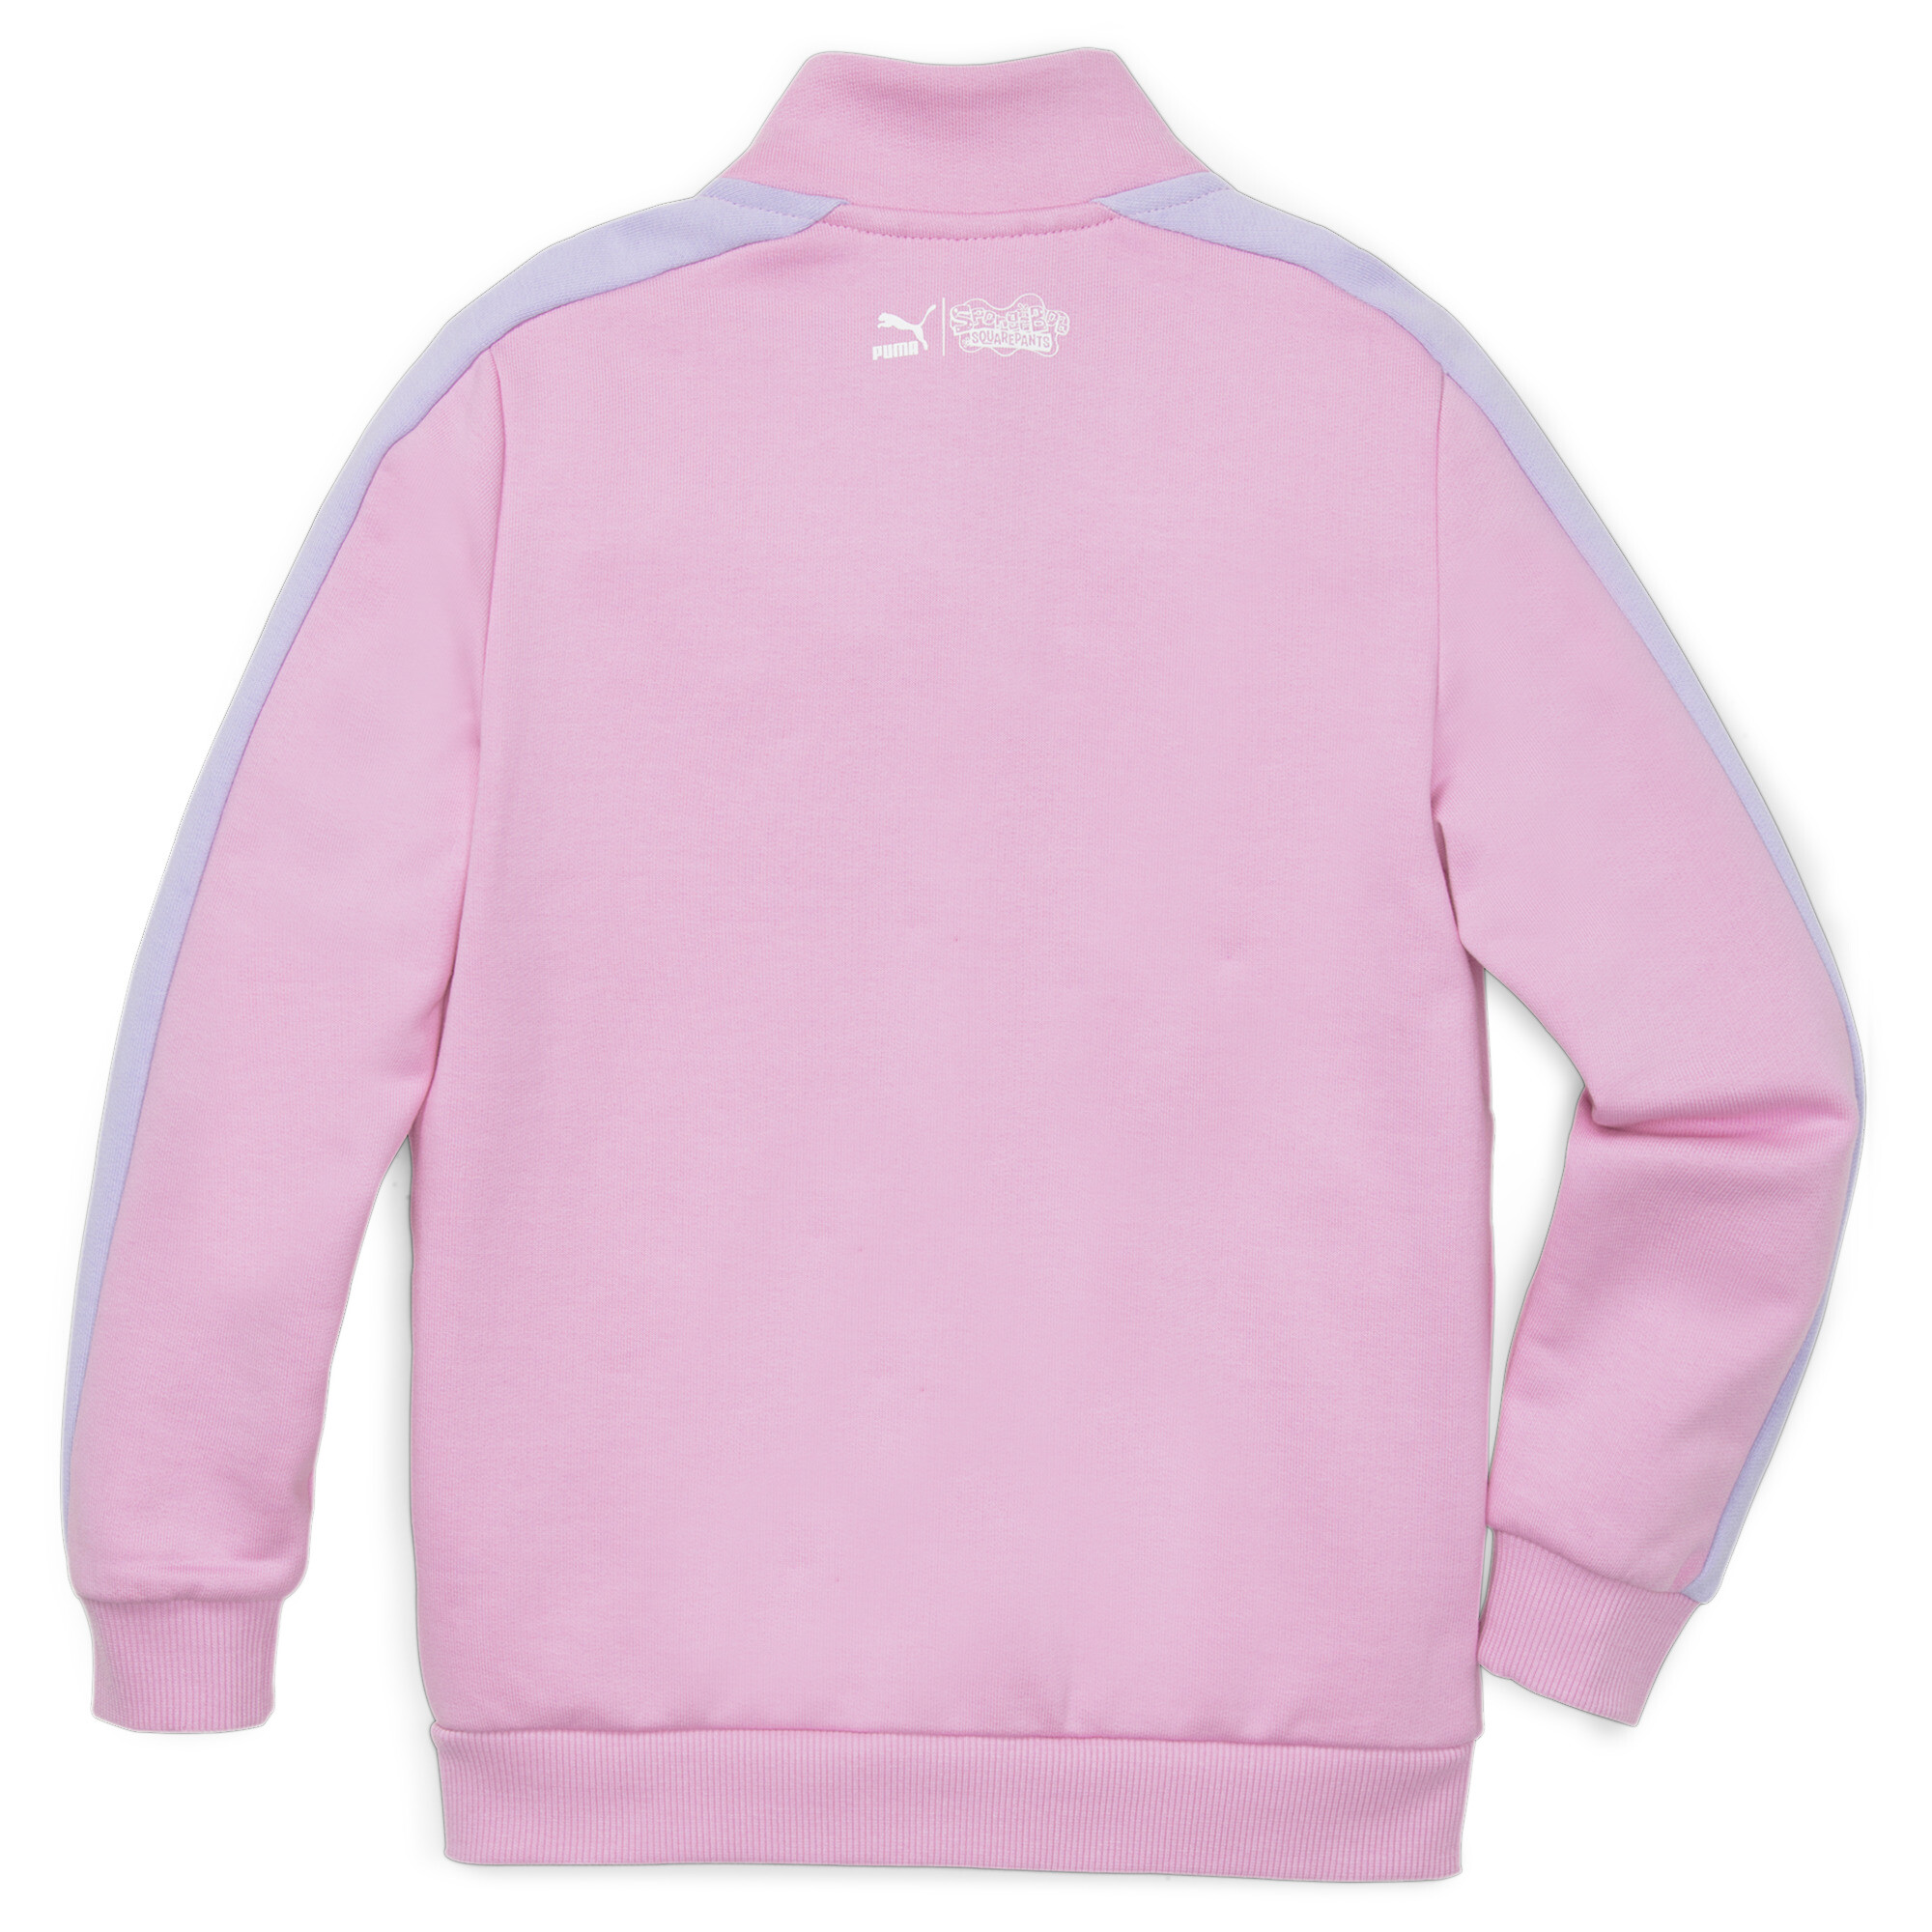 PUMA X SPONGEBOB T7 Jacket Kids In Pink, Size 13-14 Youth